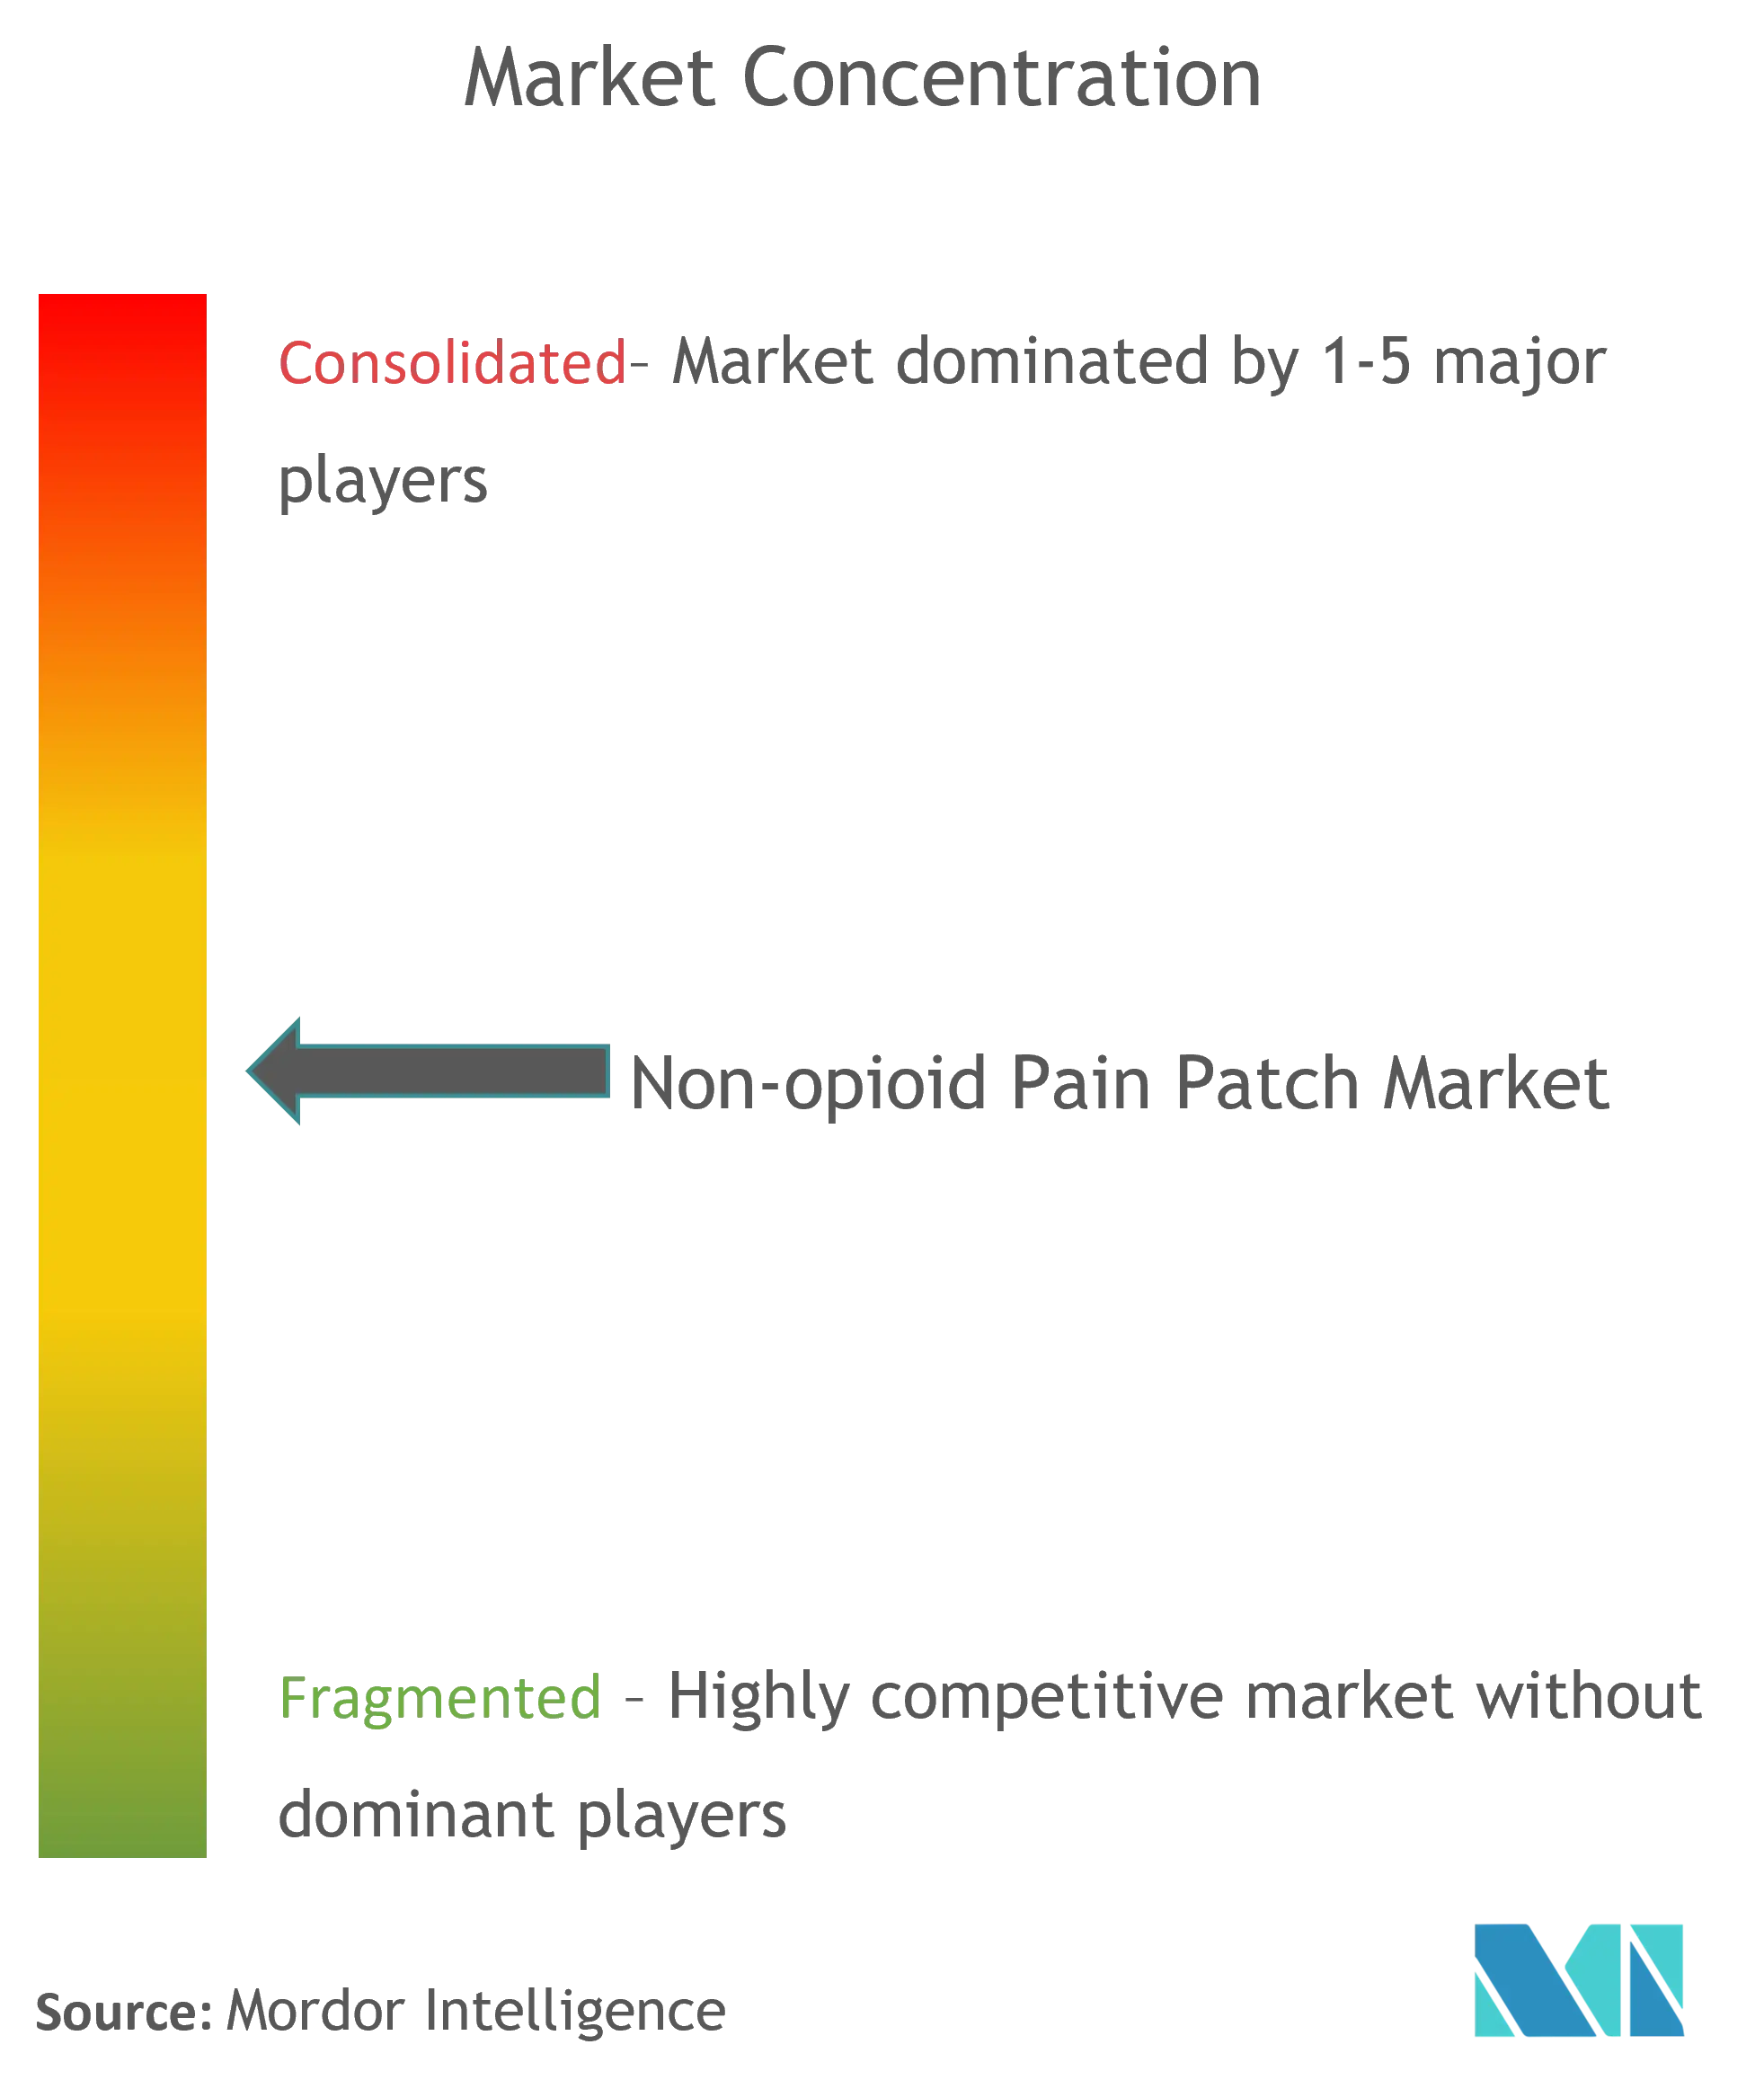 Non-Opioid Pain Patch Market Concentration